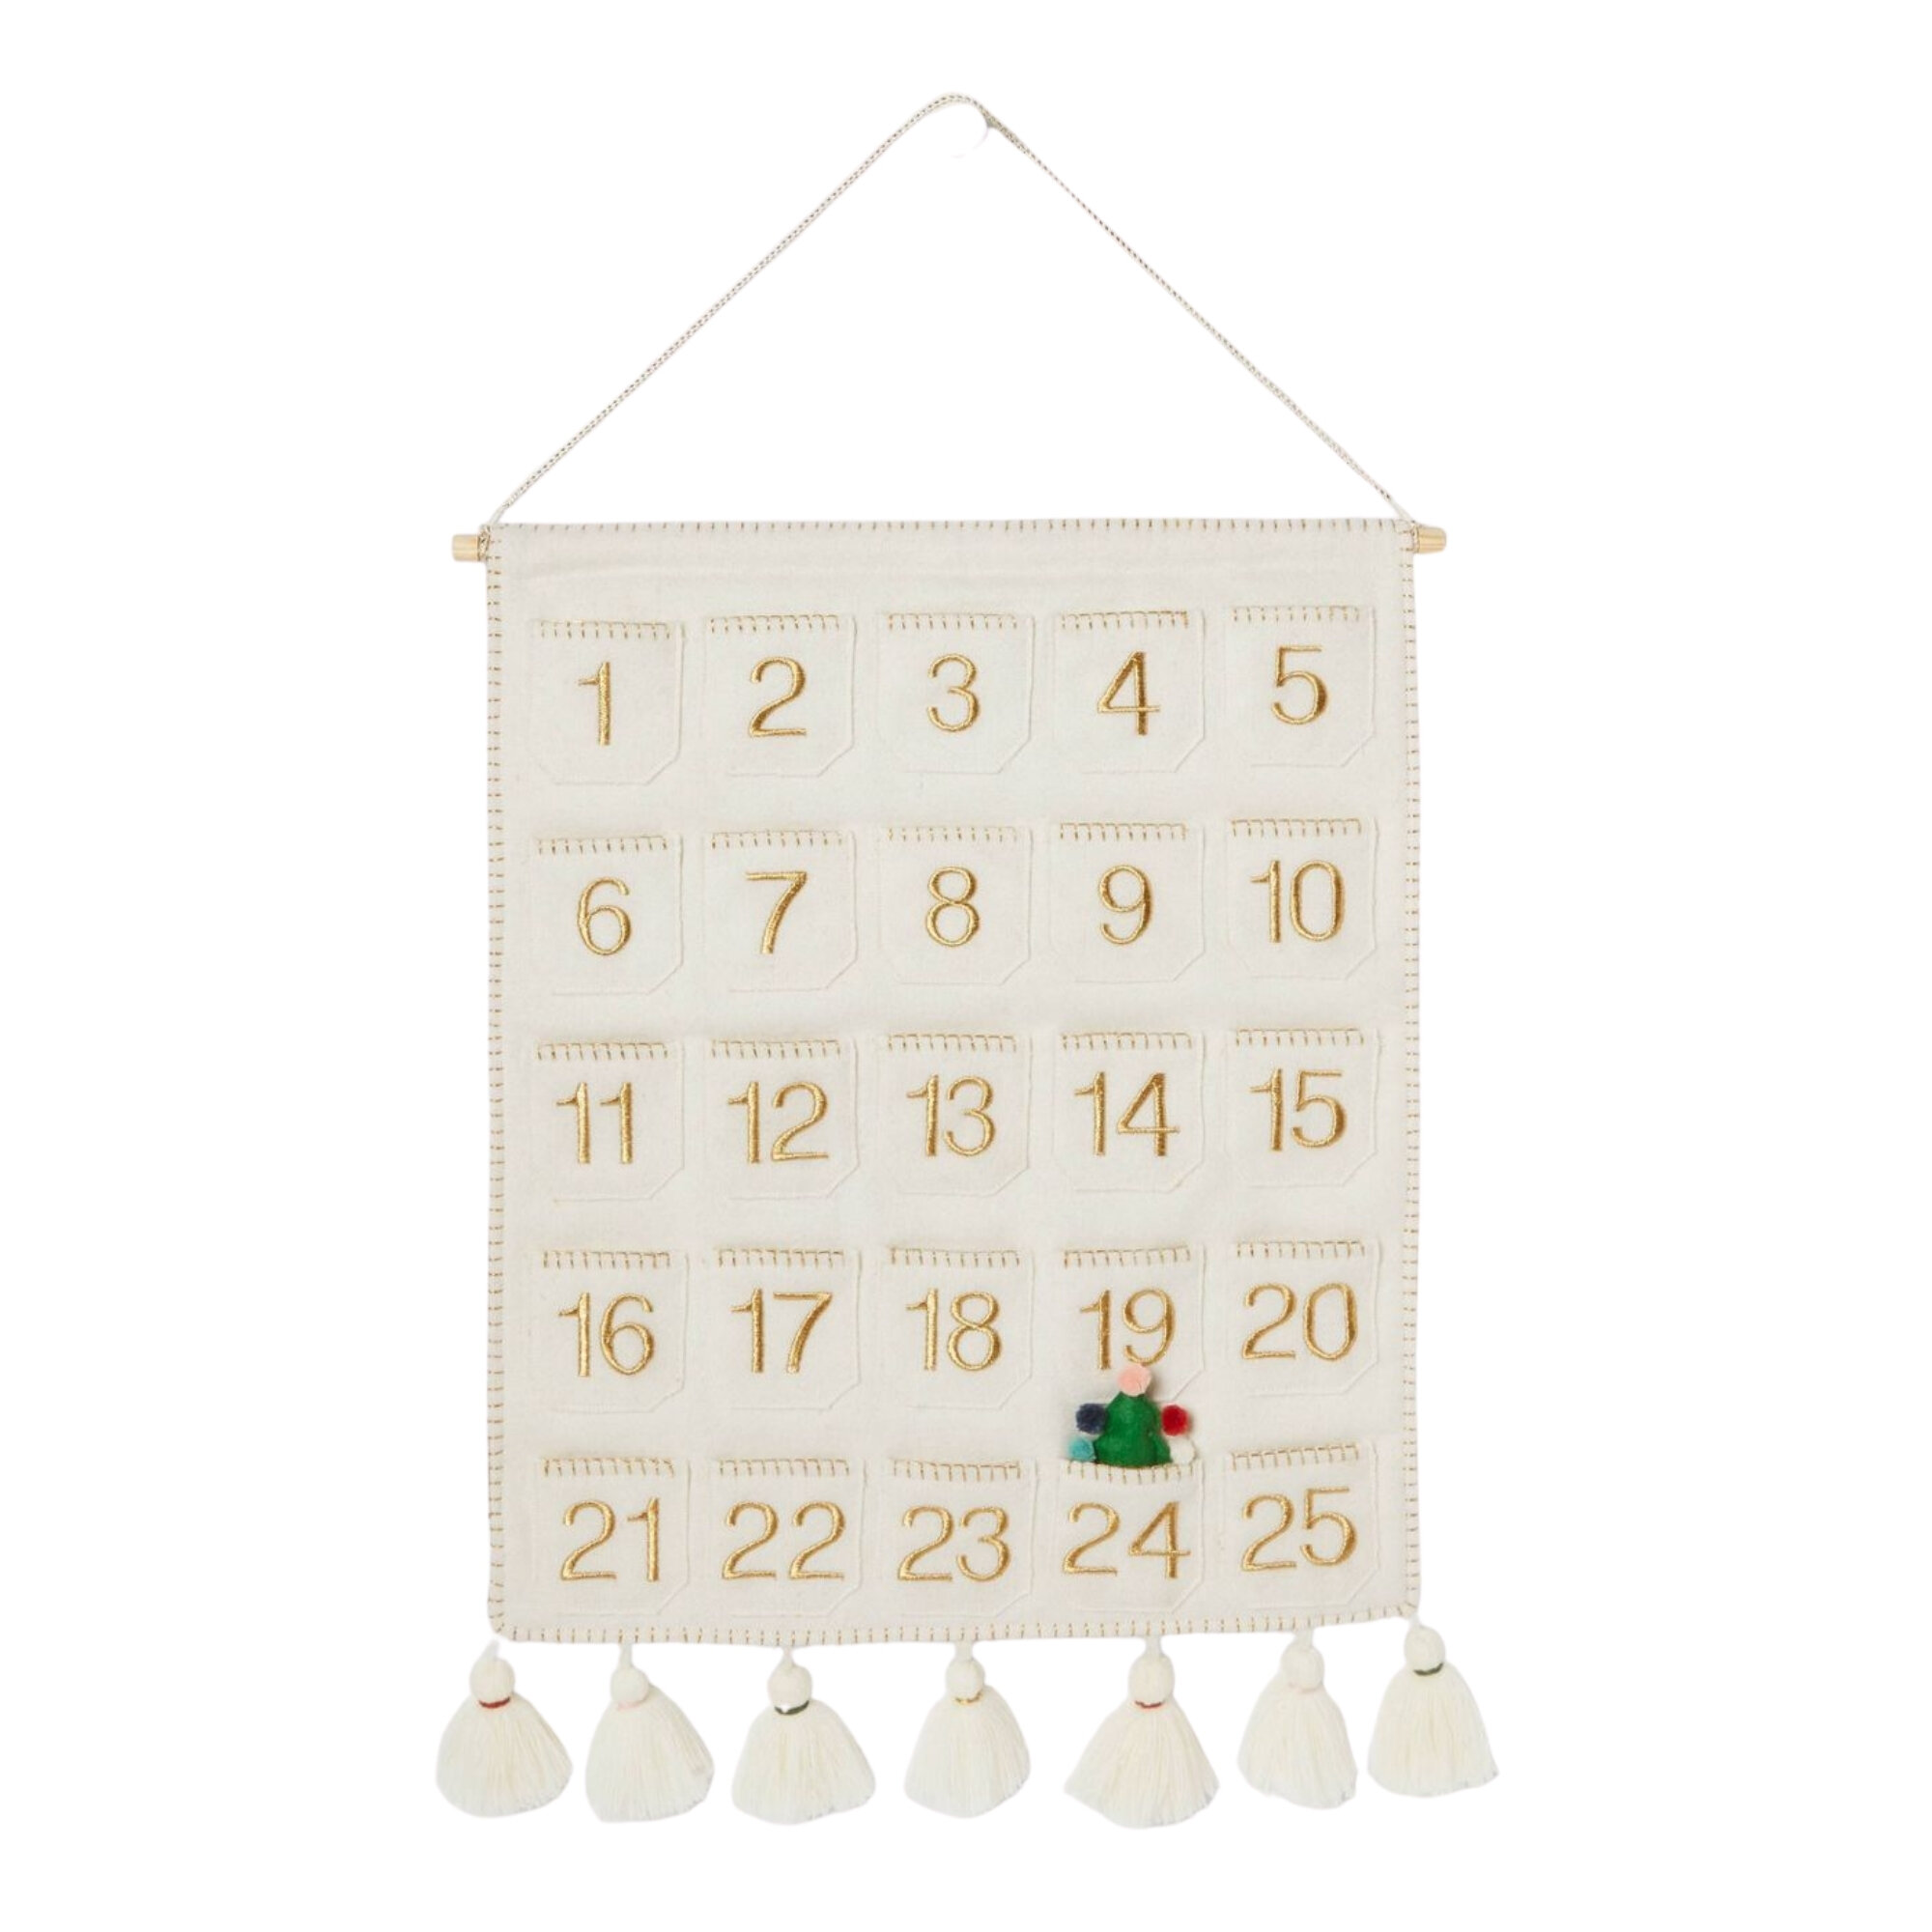 Fabric Christmas Countdown Calendar, $20.00